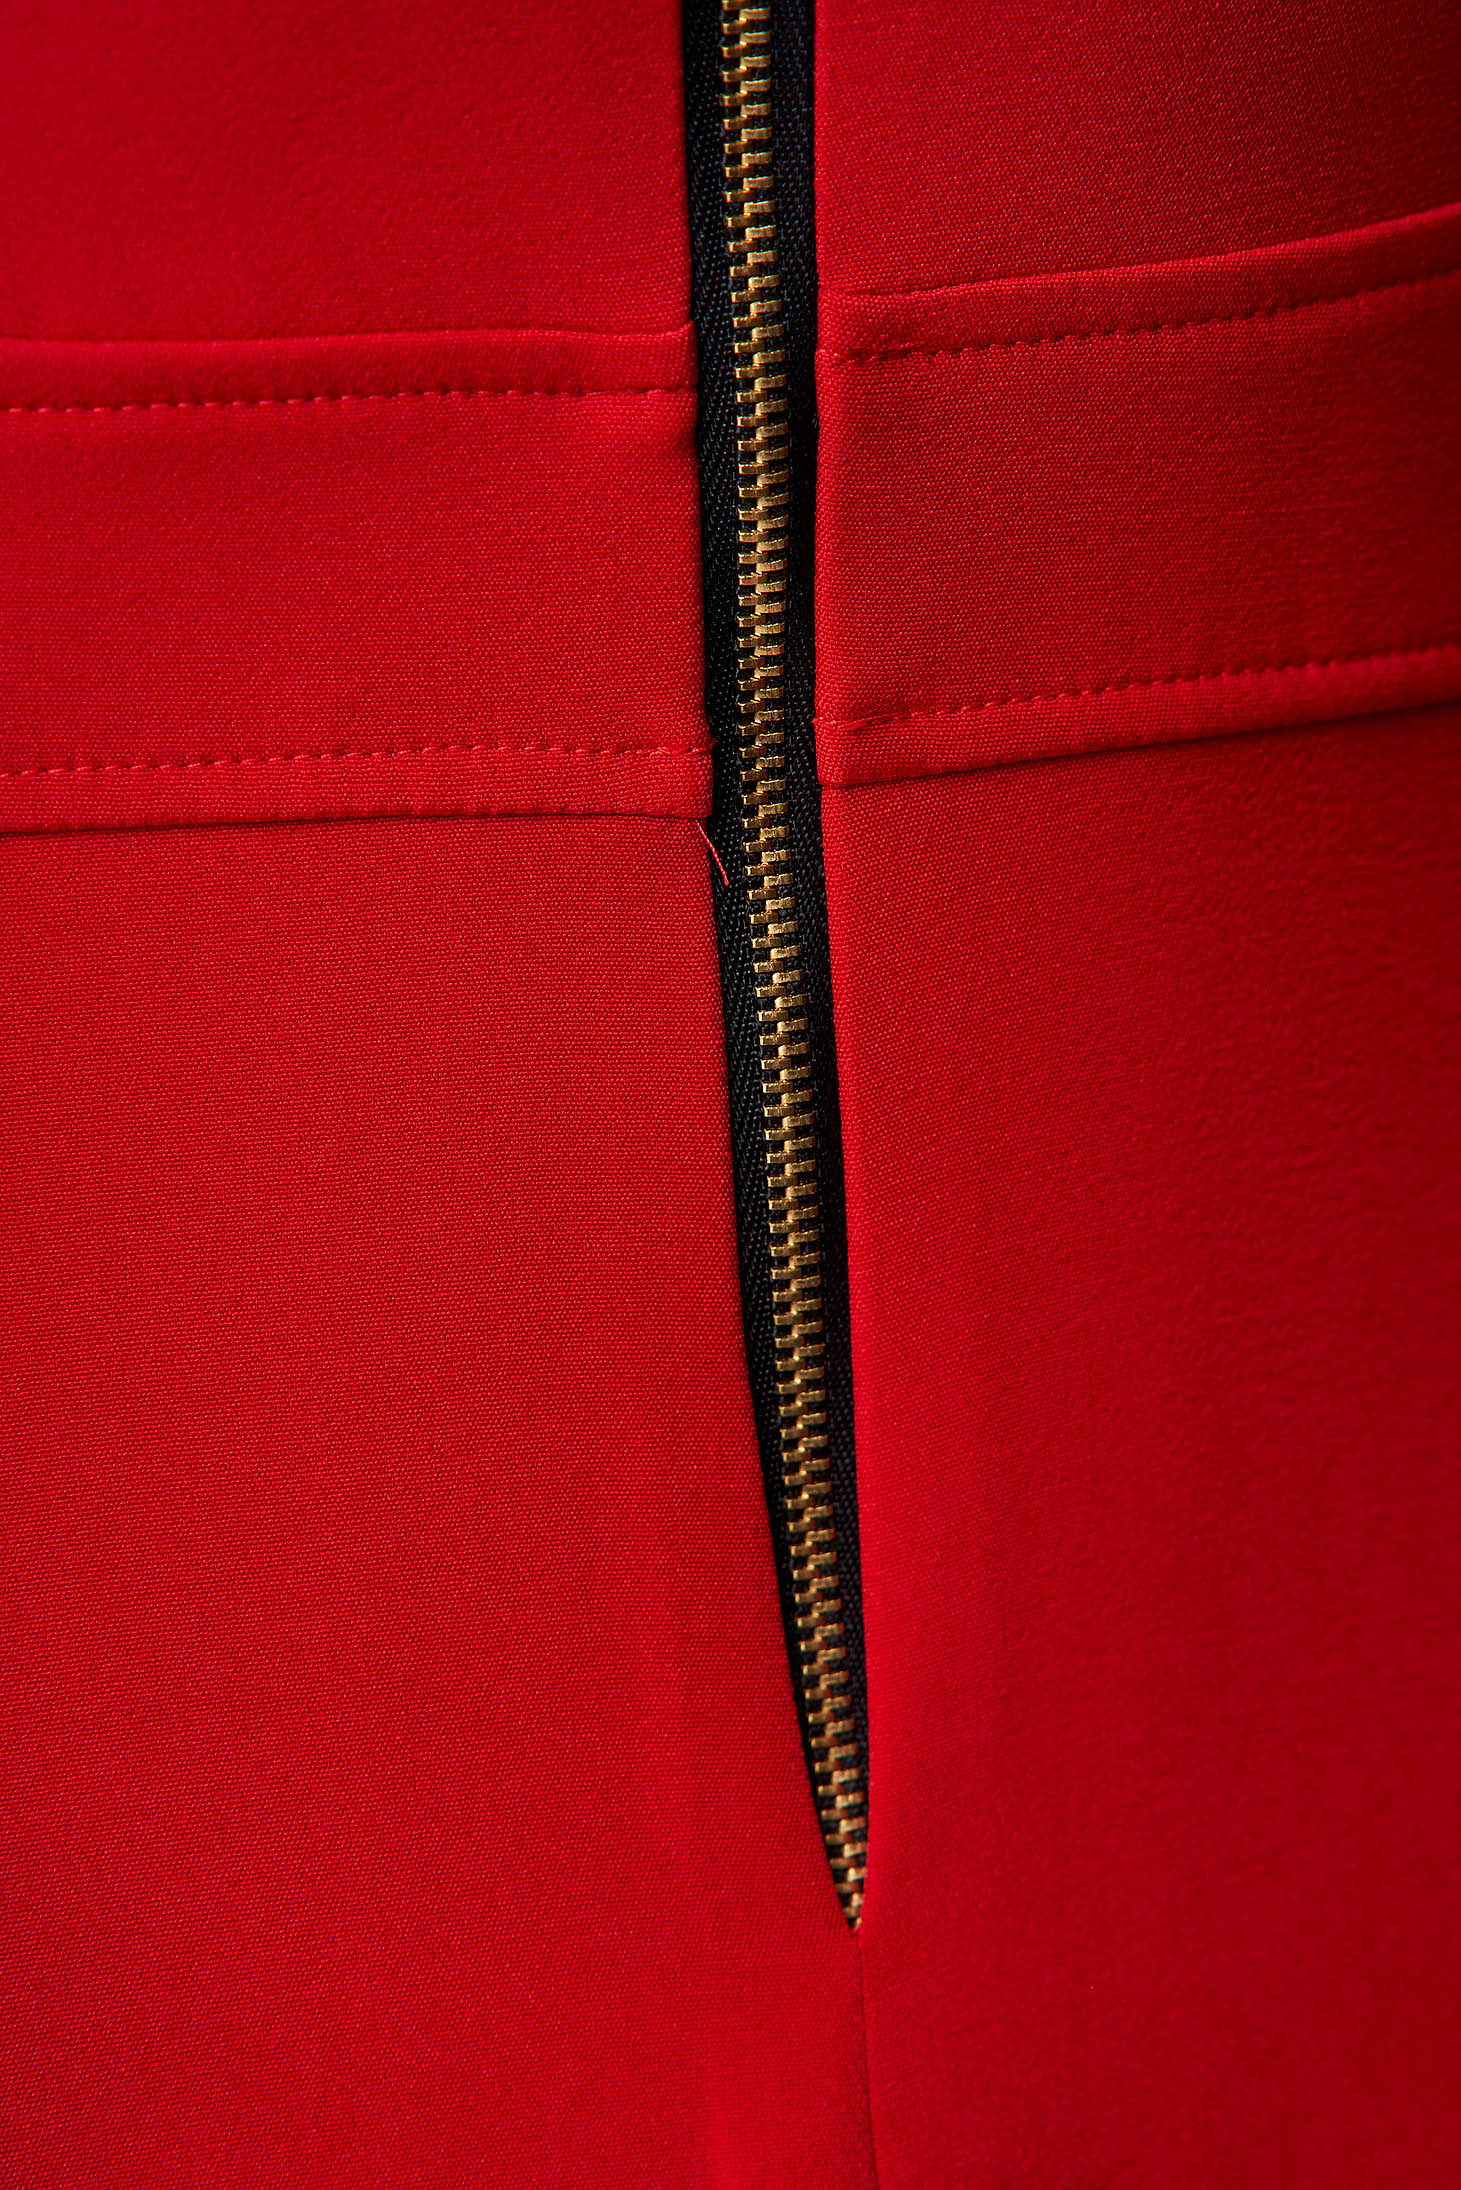 Rochie StarShinerS rosie scurta din stofa usor elastica cu croi in a si buzunare 4 - StarShinerS.ro